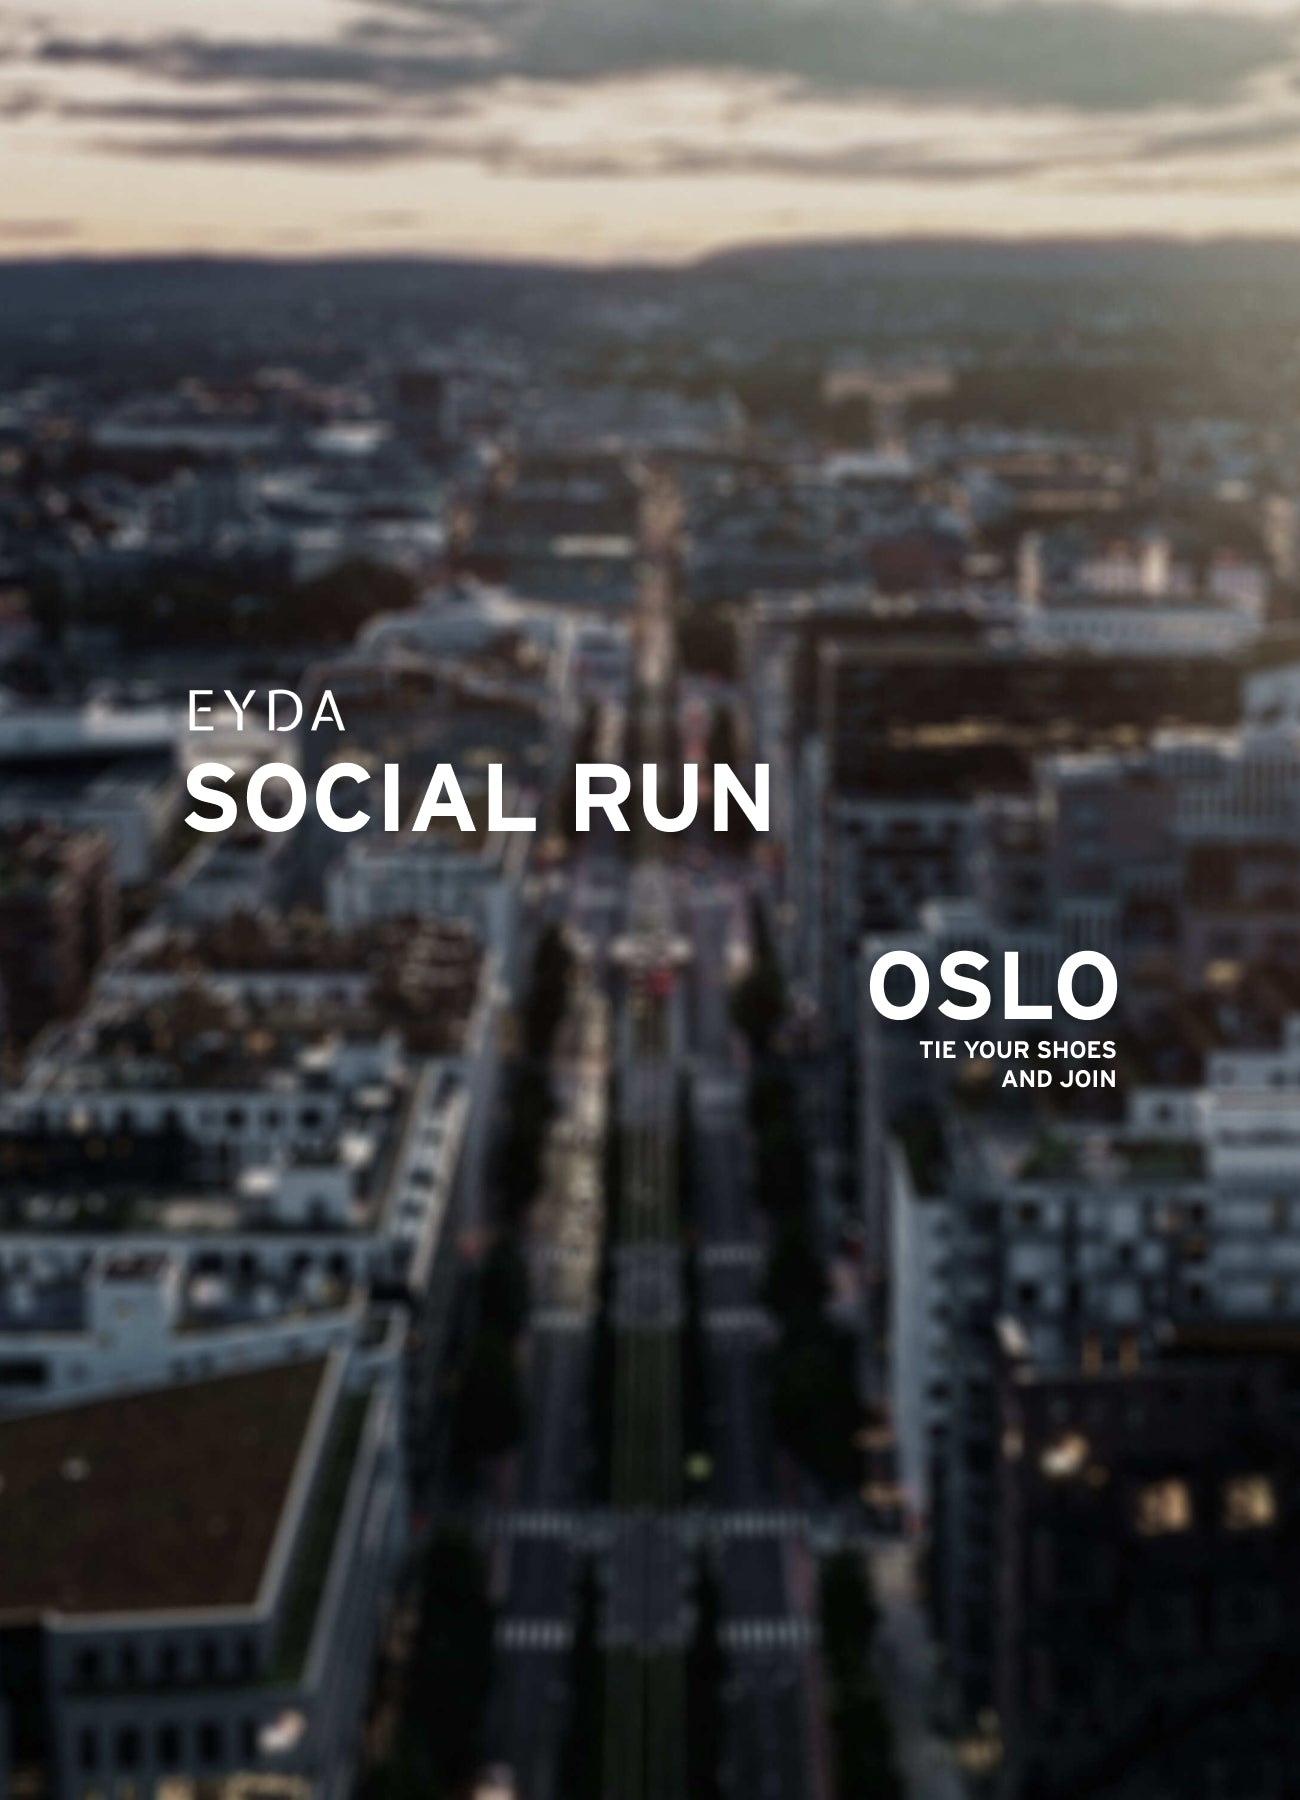 EYDA Social Run Oslo